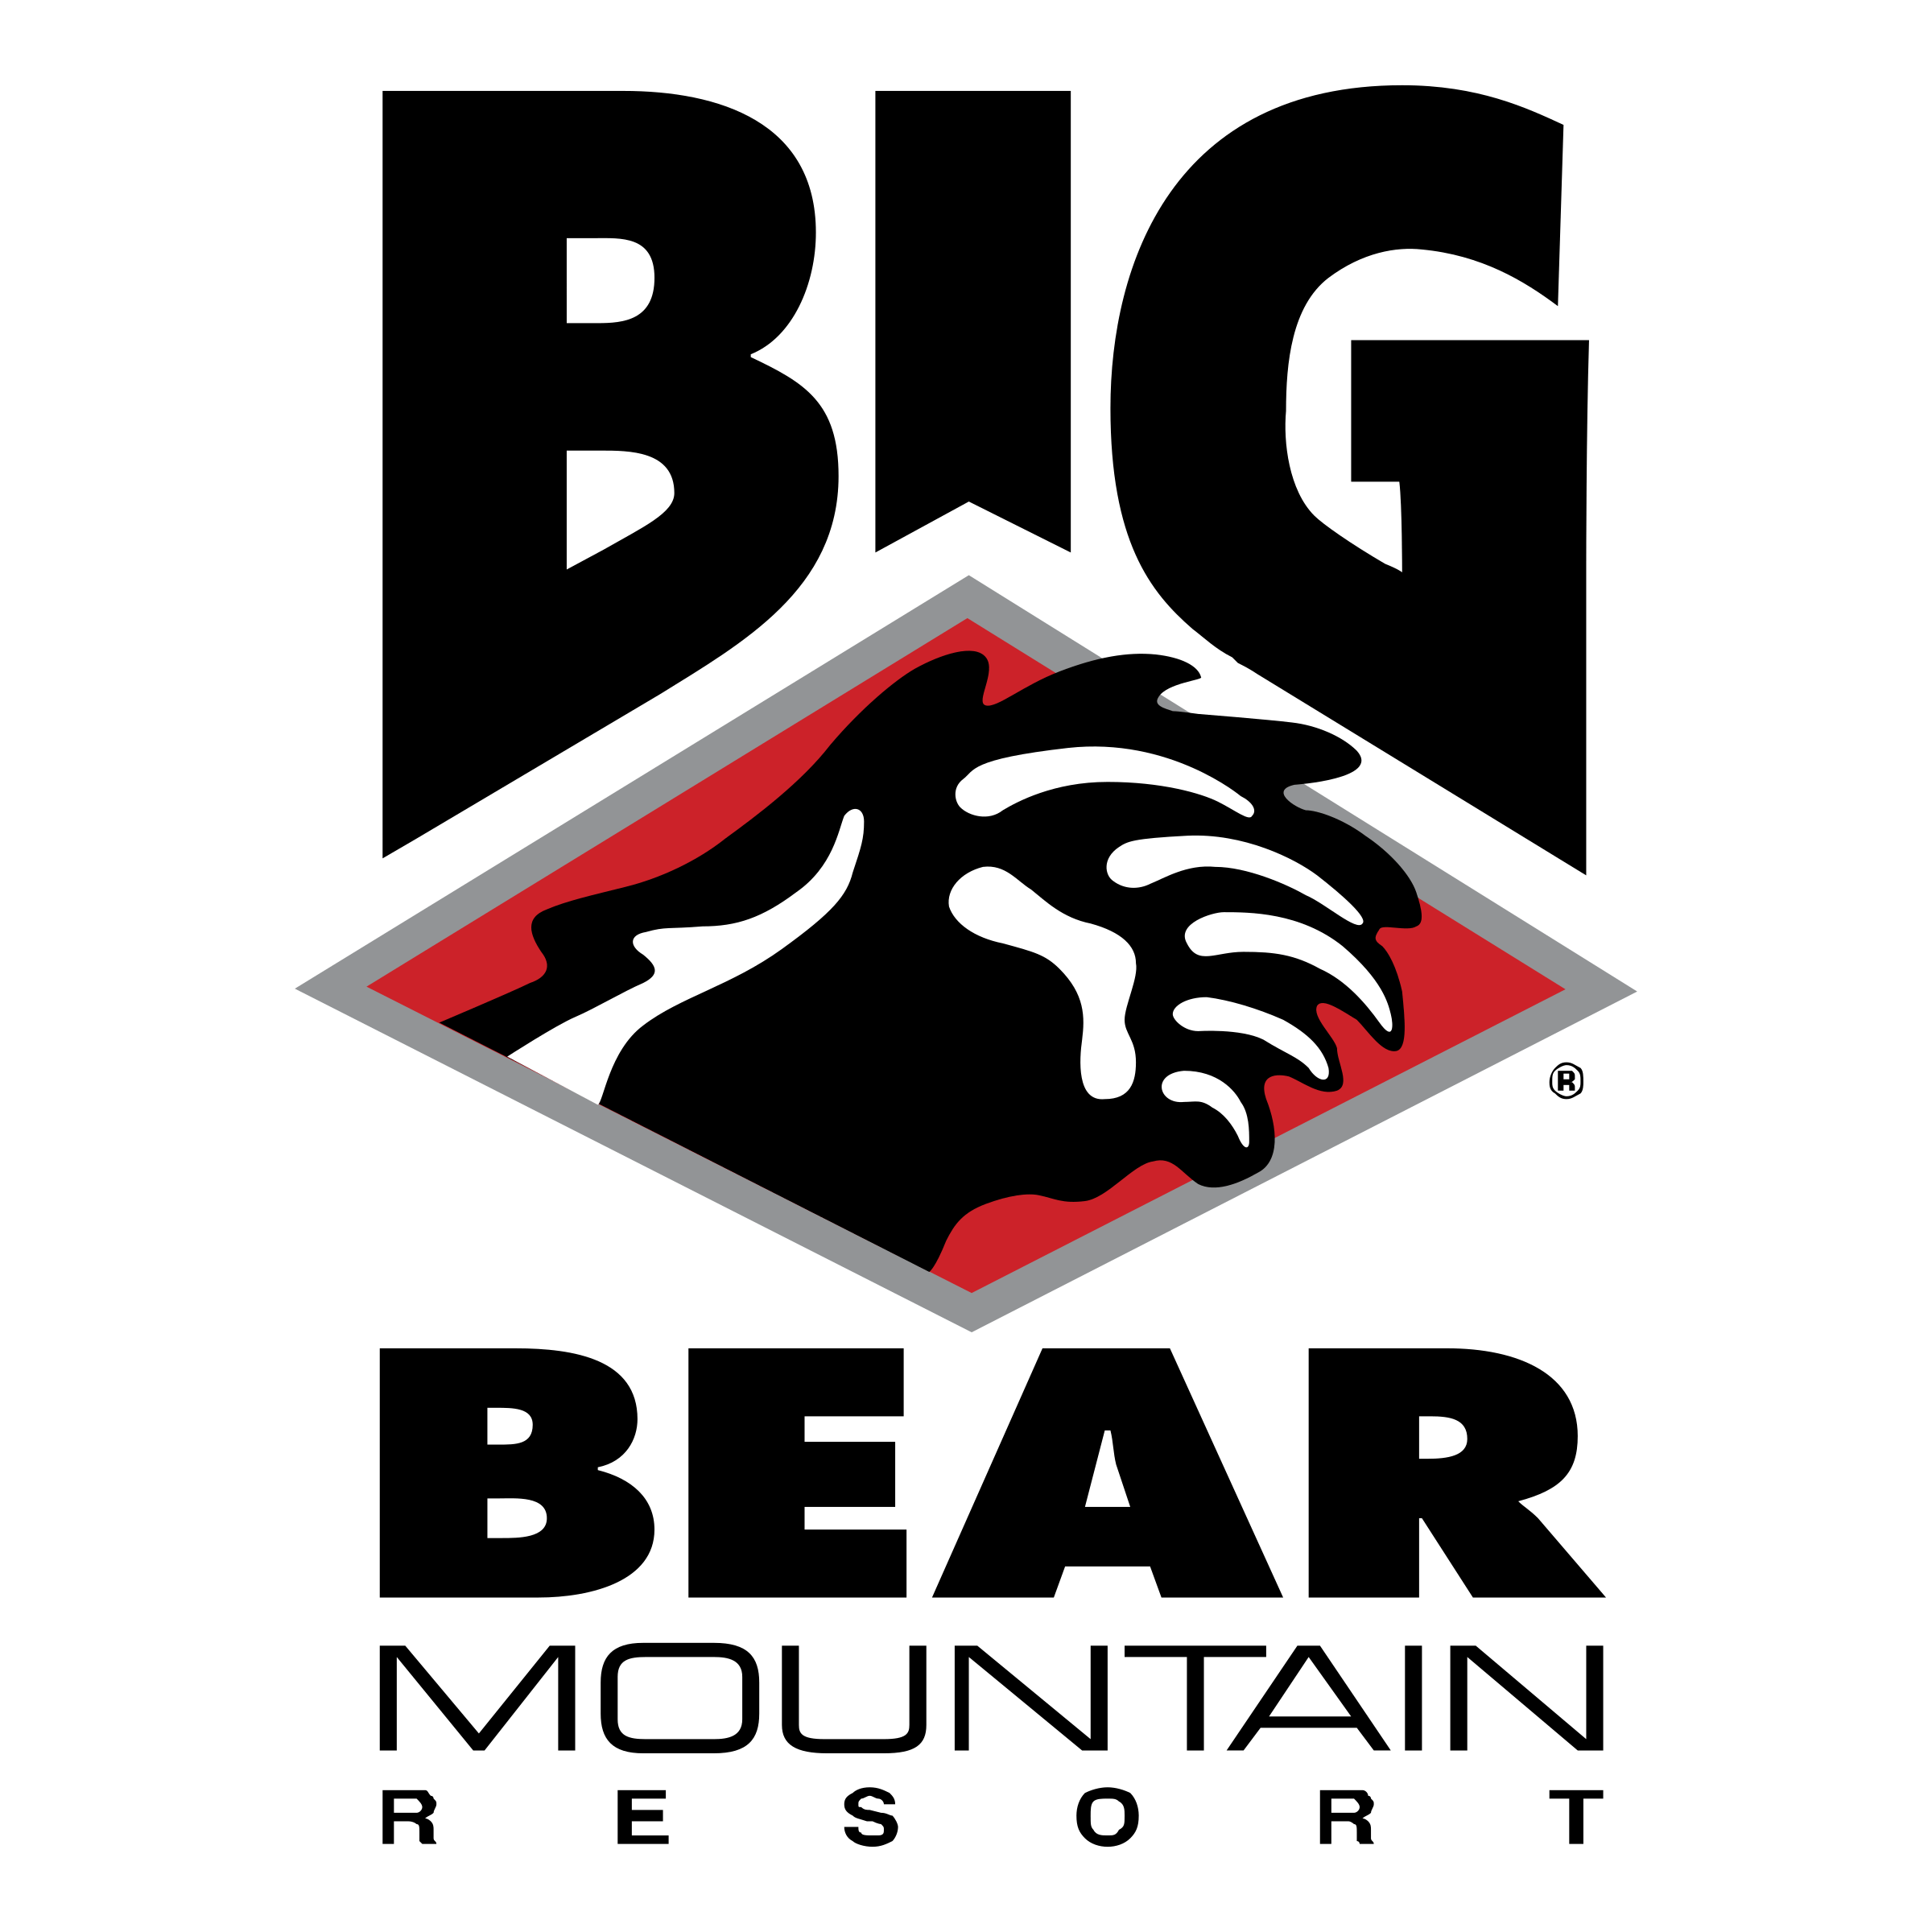 Big Bear Mountain Logo - Big Bear Mountain Logo PNG Transparent & SVG Vector - Freebie Supply